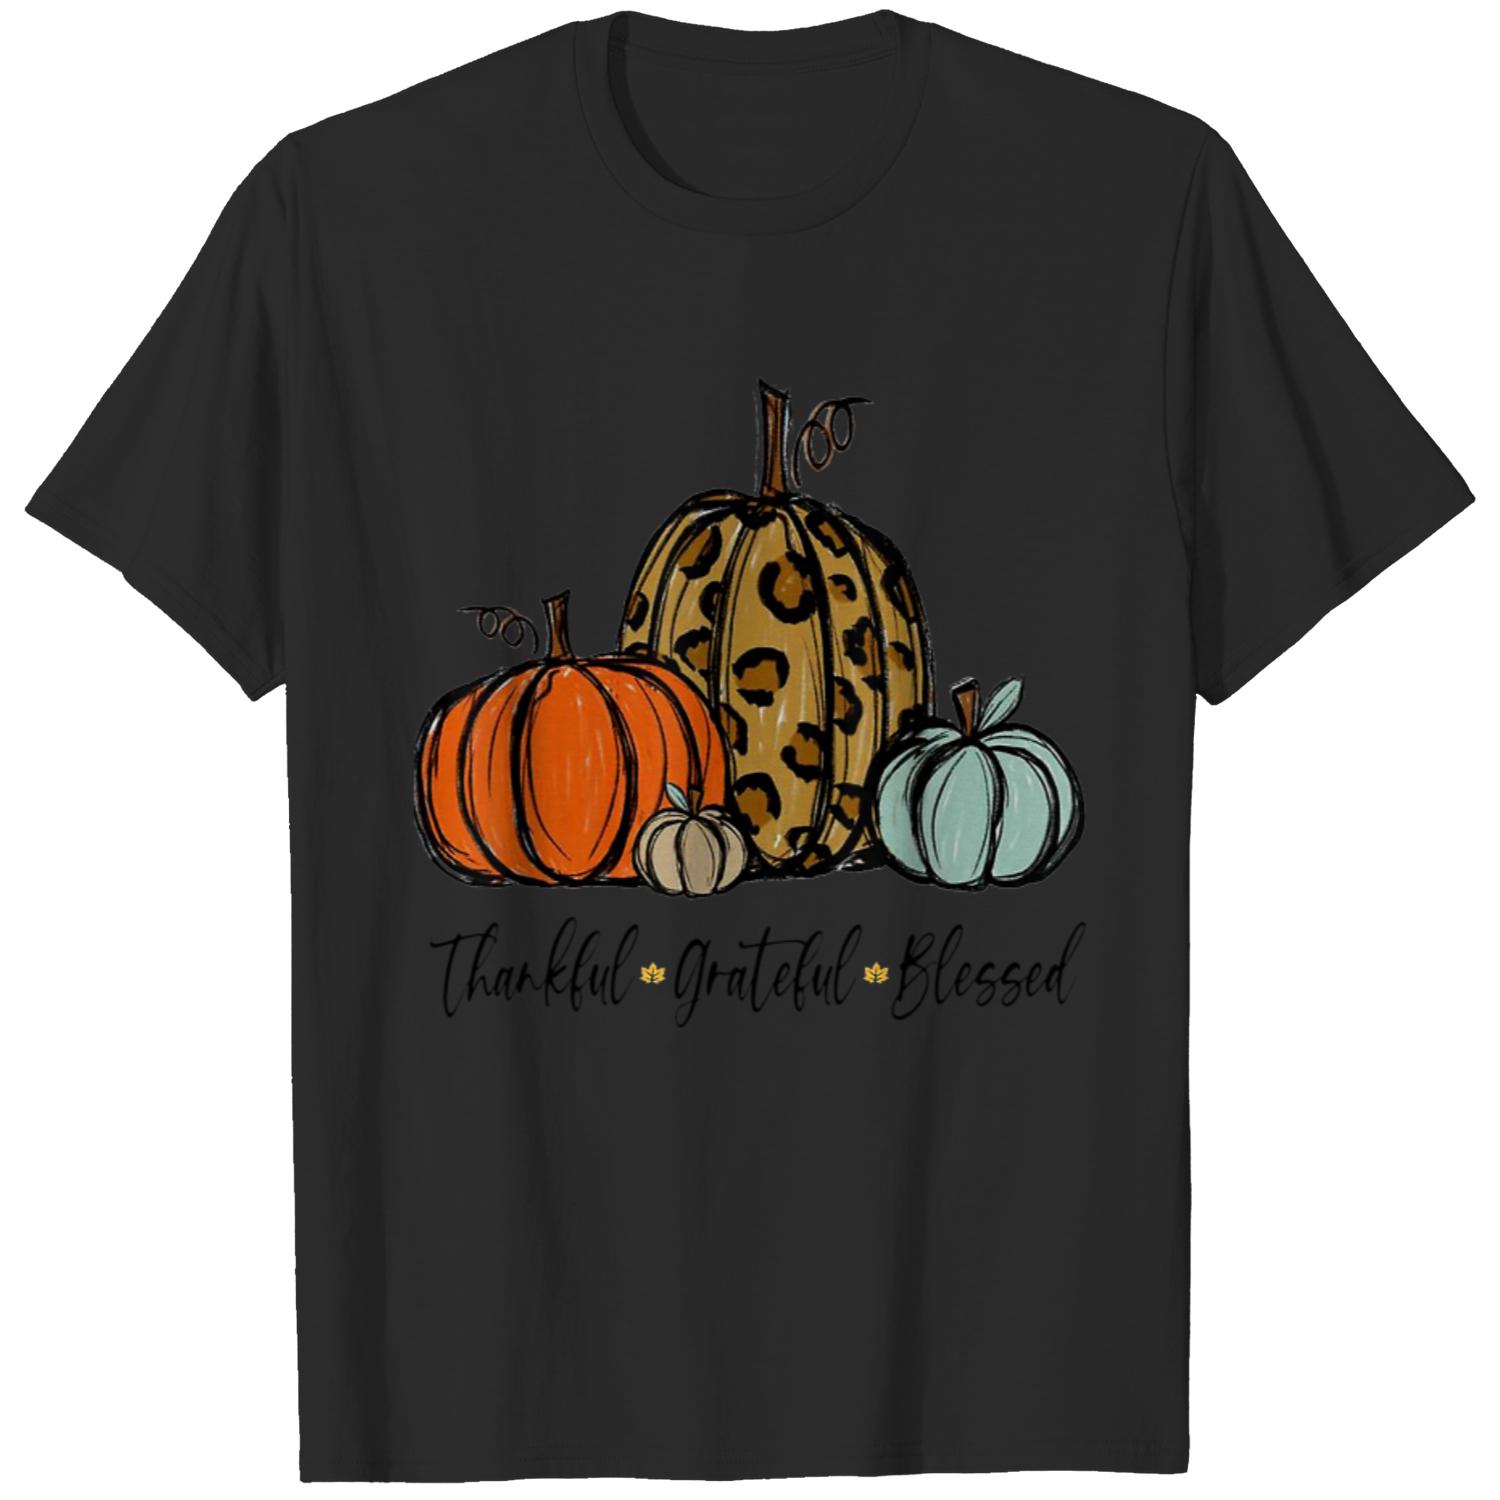 Thankful Grateful Blessed Pumpkin Thanksgiving Day Gift T-Shirt